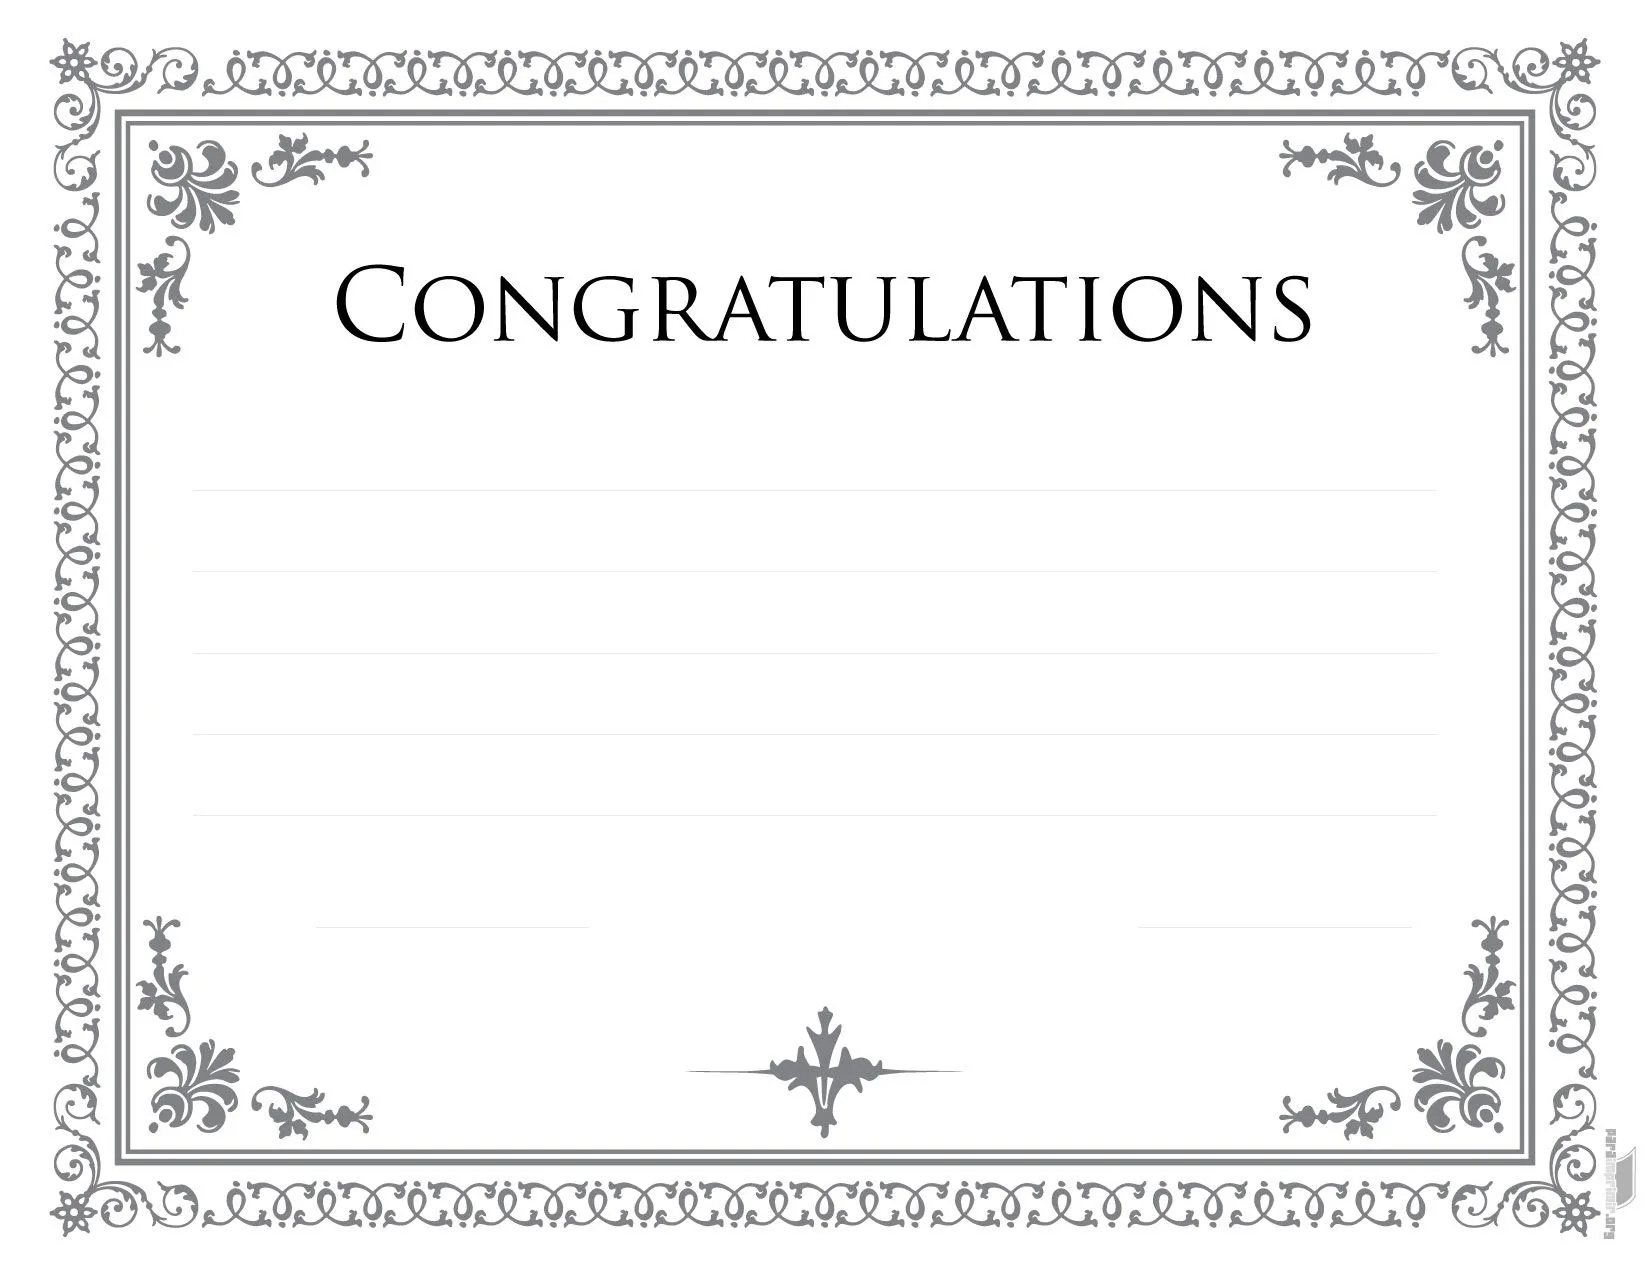 Diploma de congratulations para imprimir